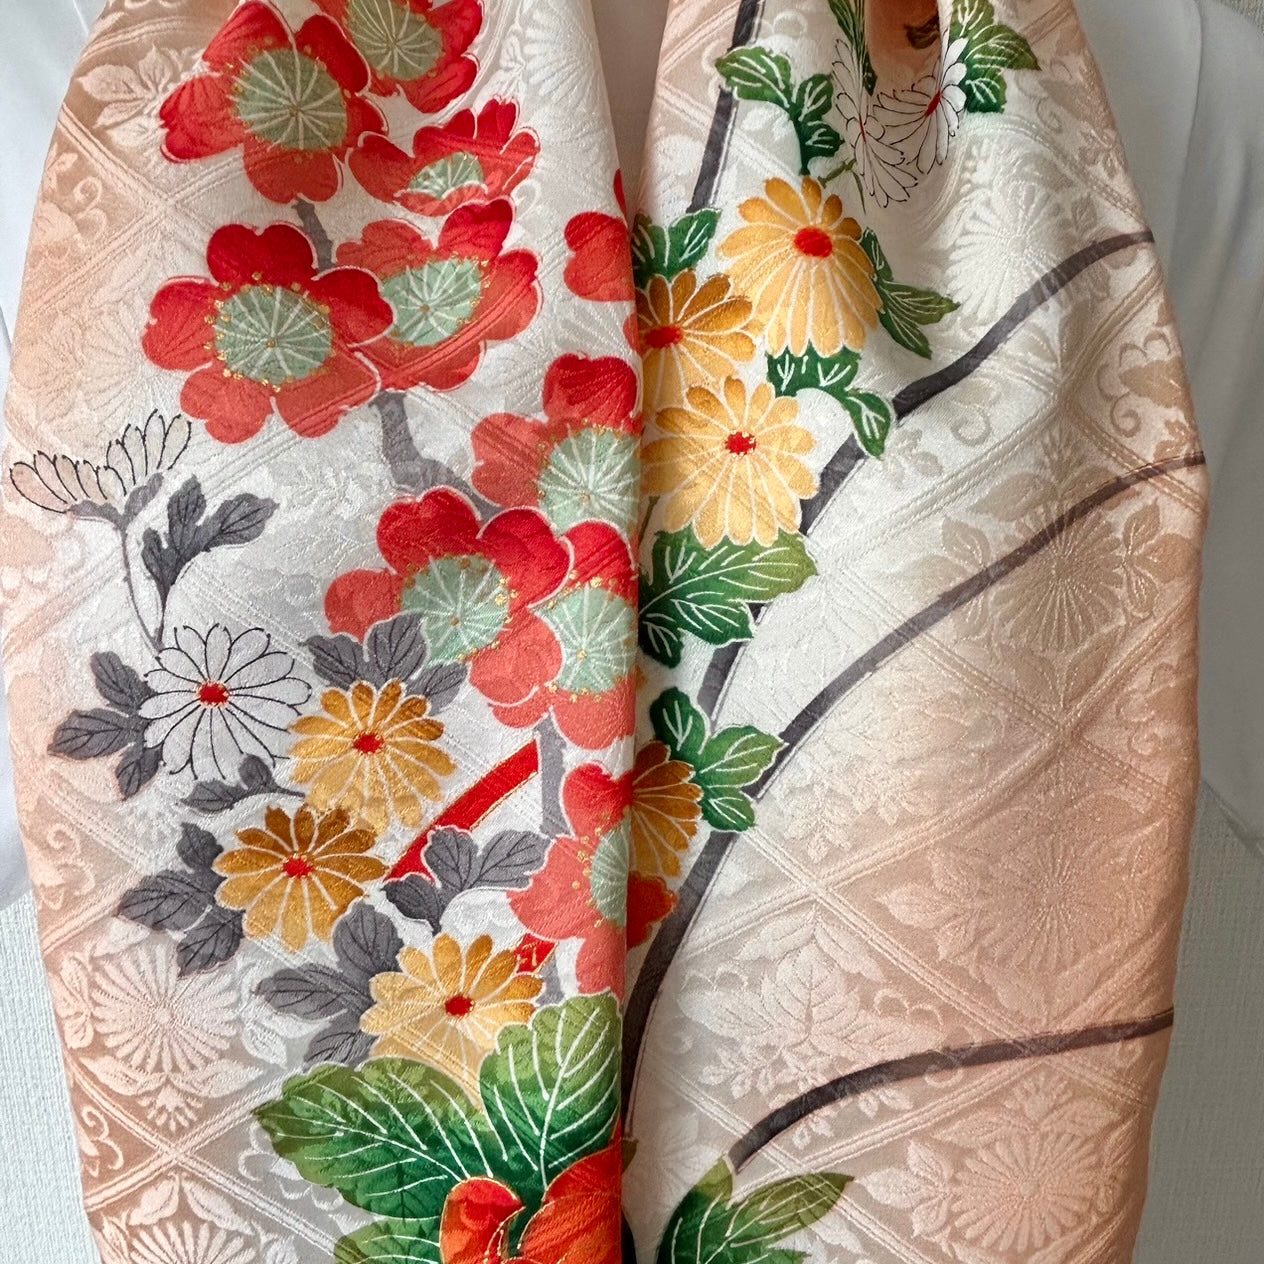 Silk Kimono scarf, Handcrafted, Upcycled, #2051